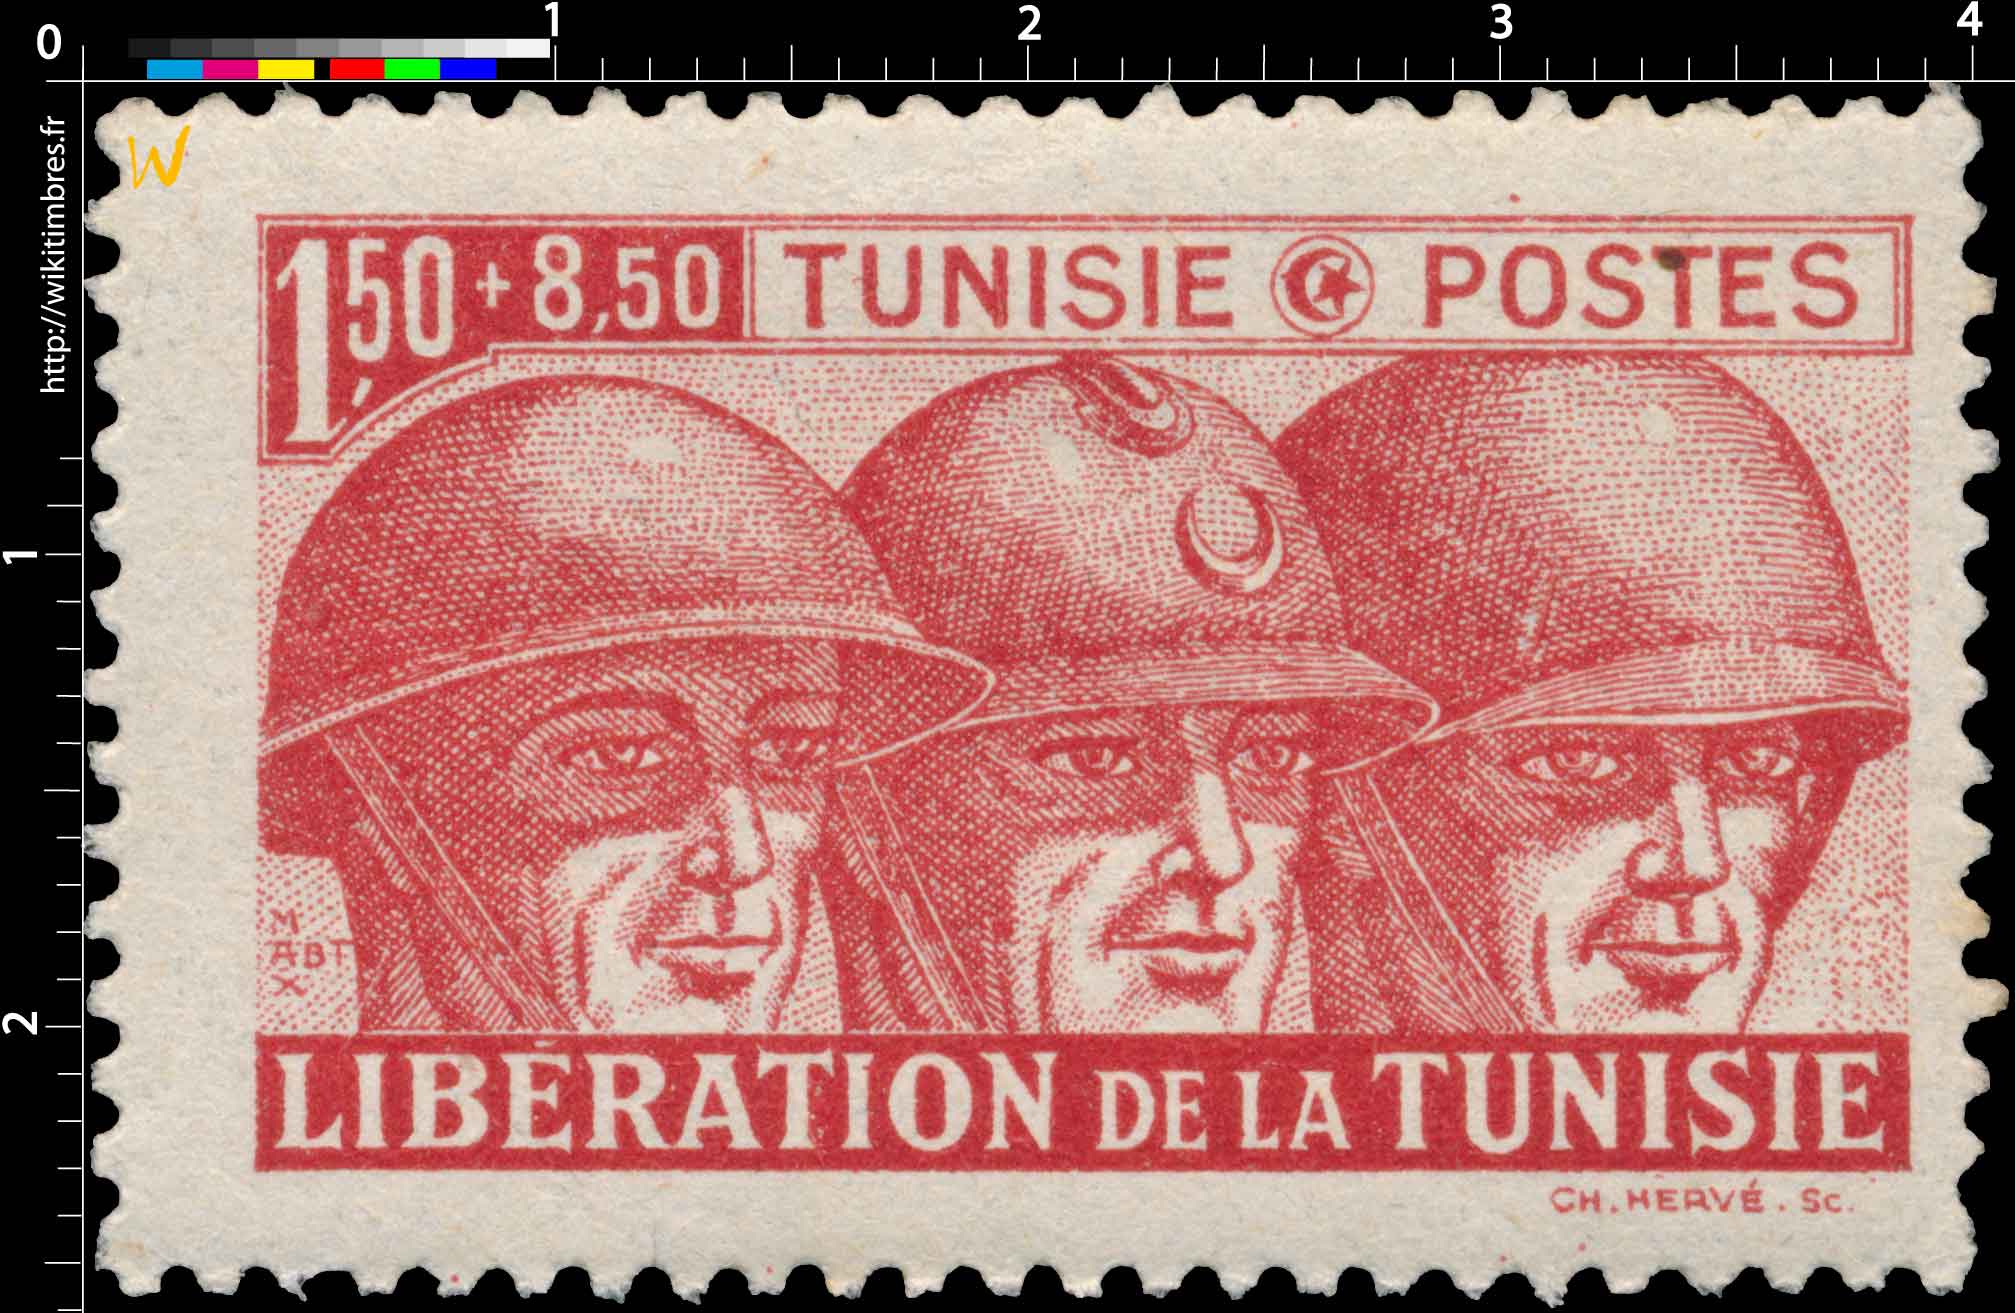 Libération de la Tunisie 